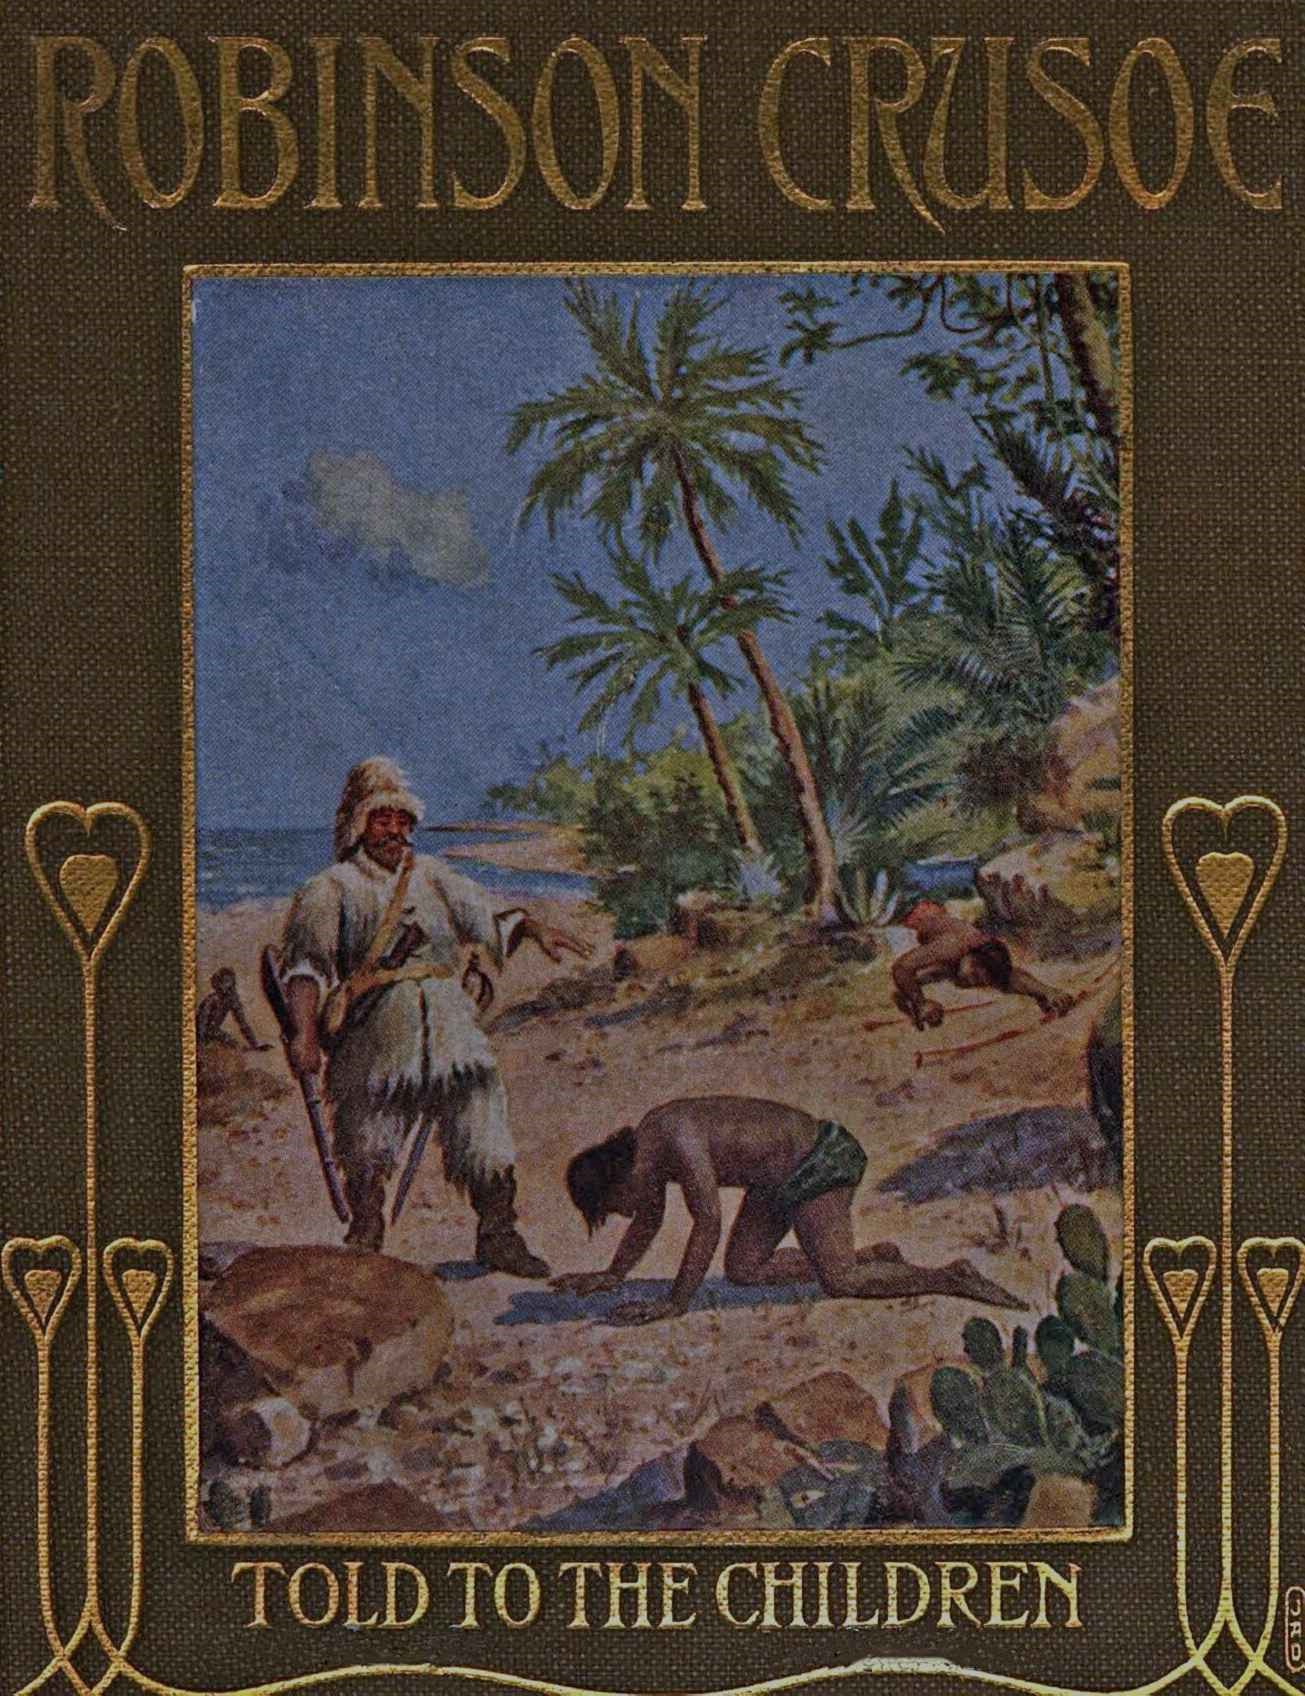 BooK cover ofRobinson Crusoe Told to the children